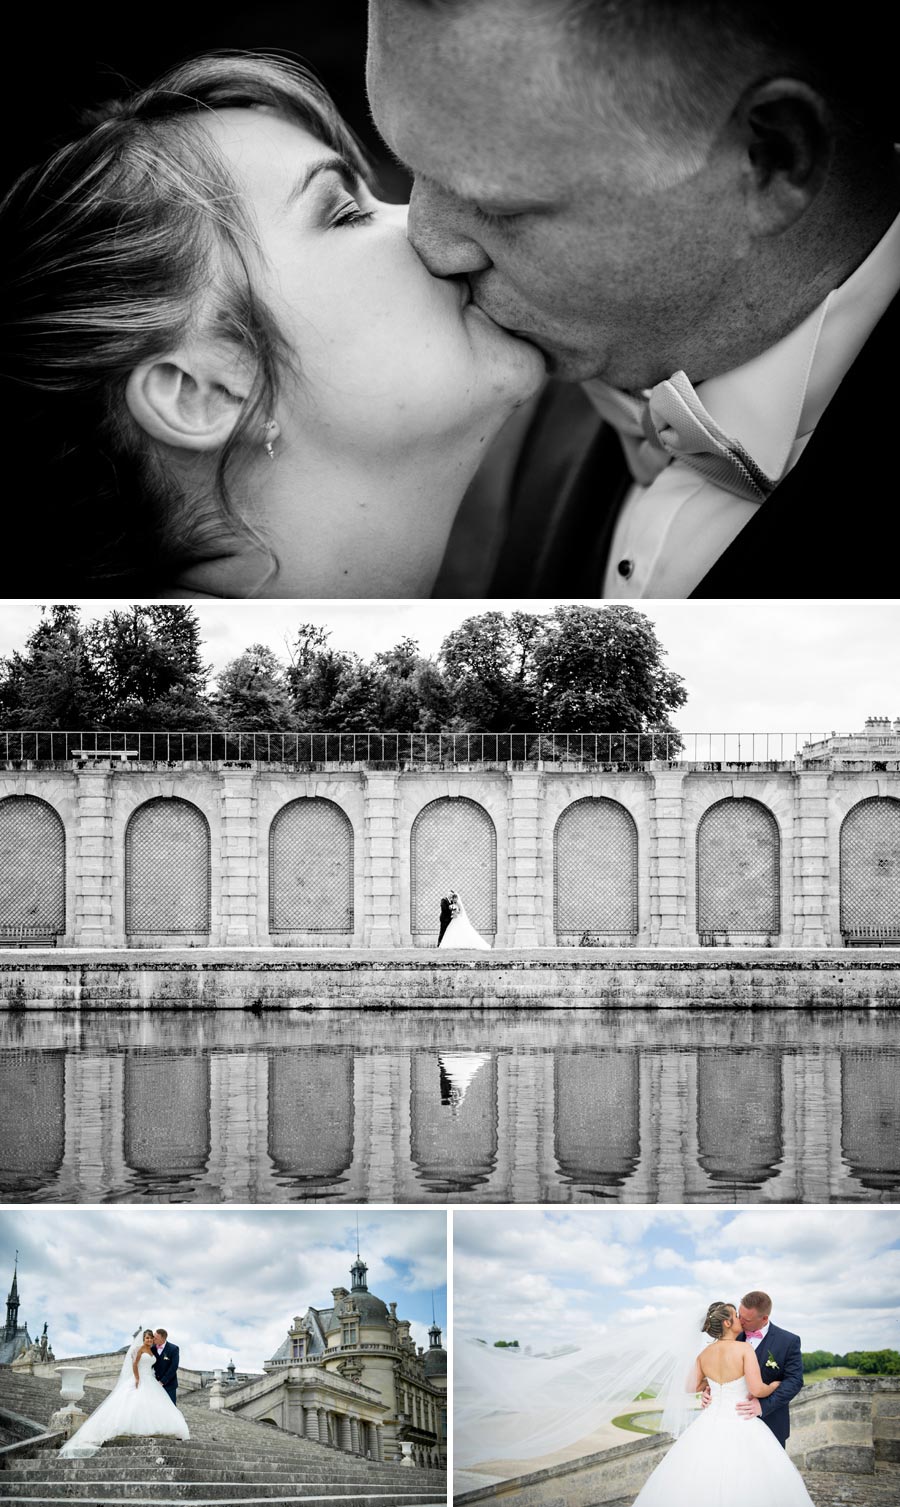 Photographe mariage chantilly